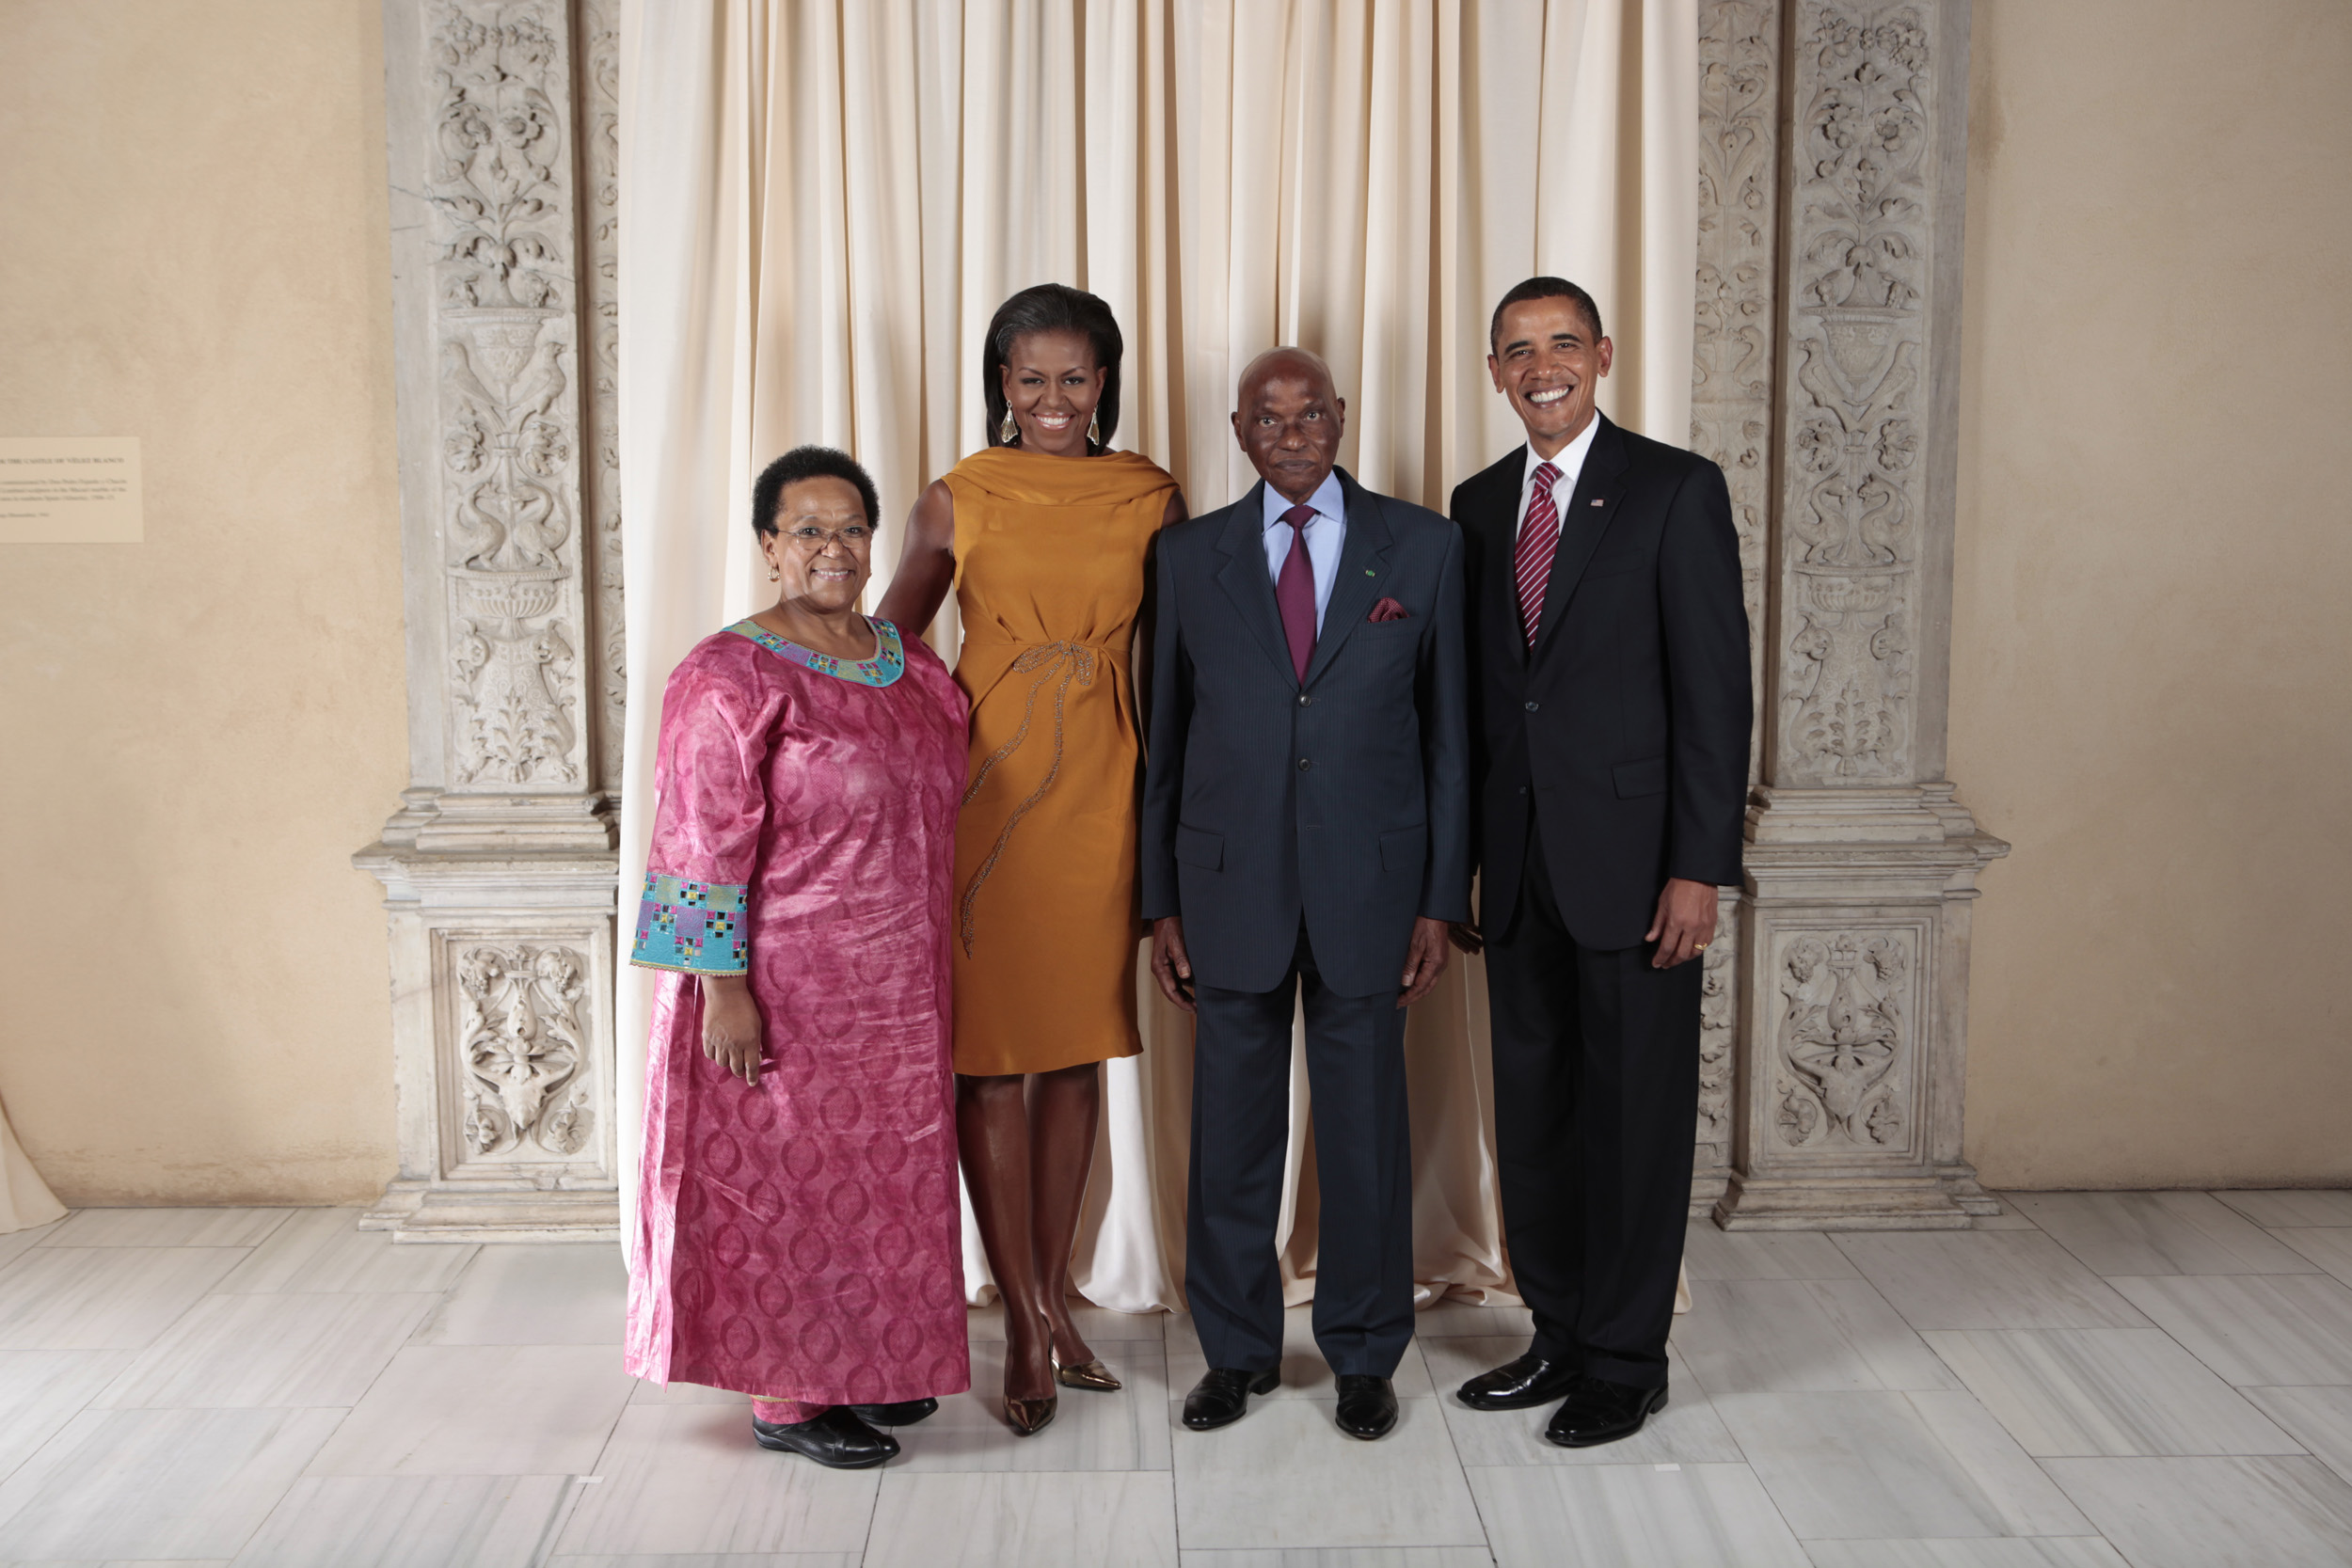 Abdoulaye Wade with Obamas